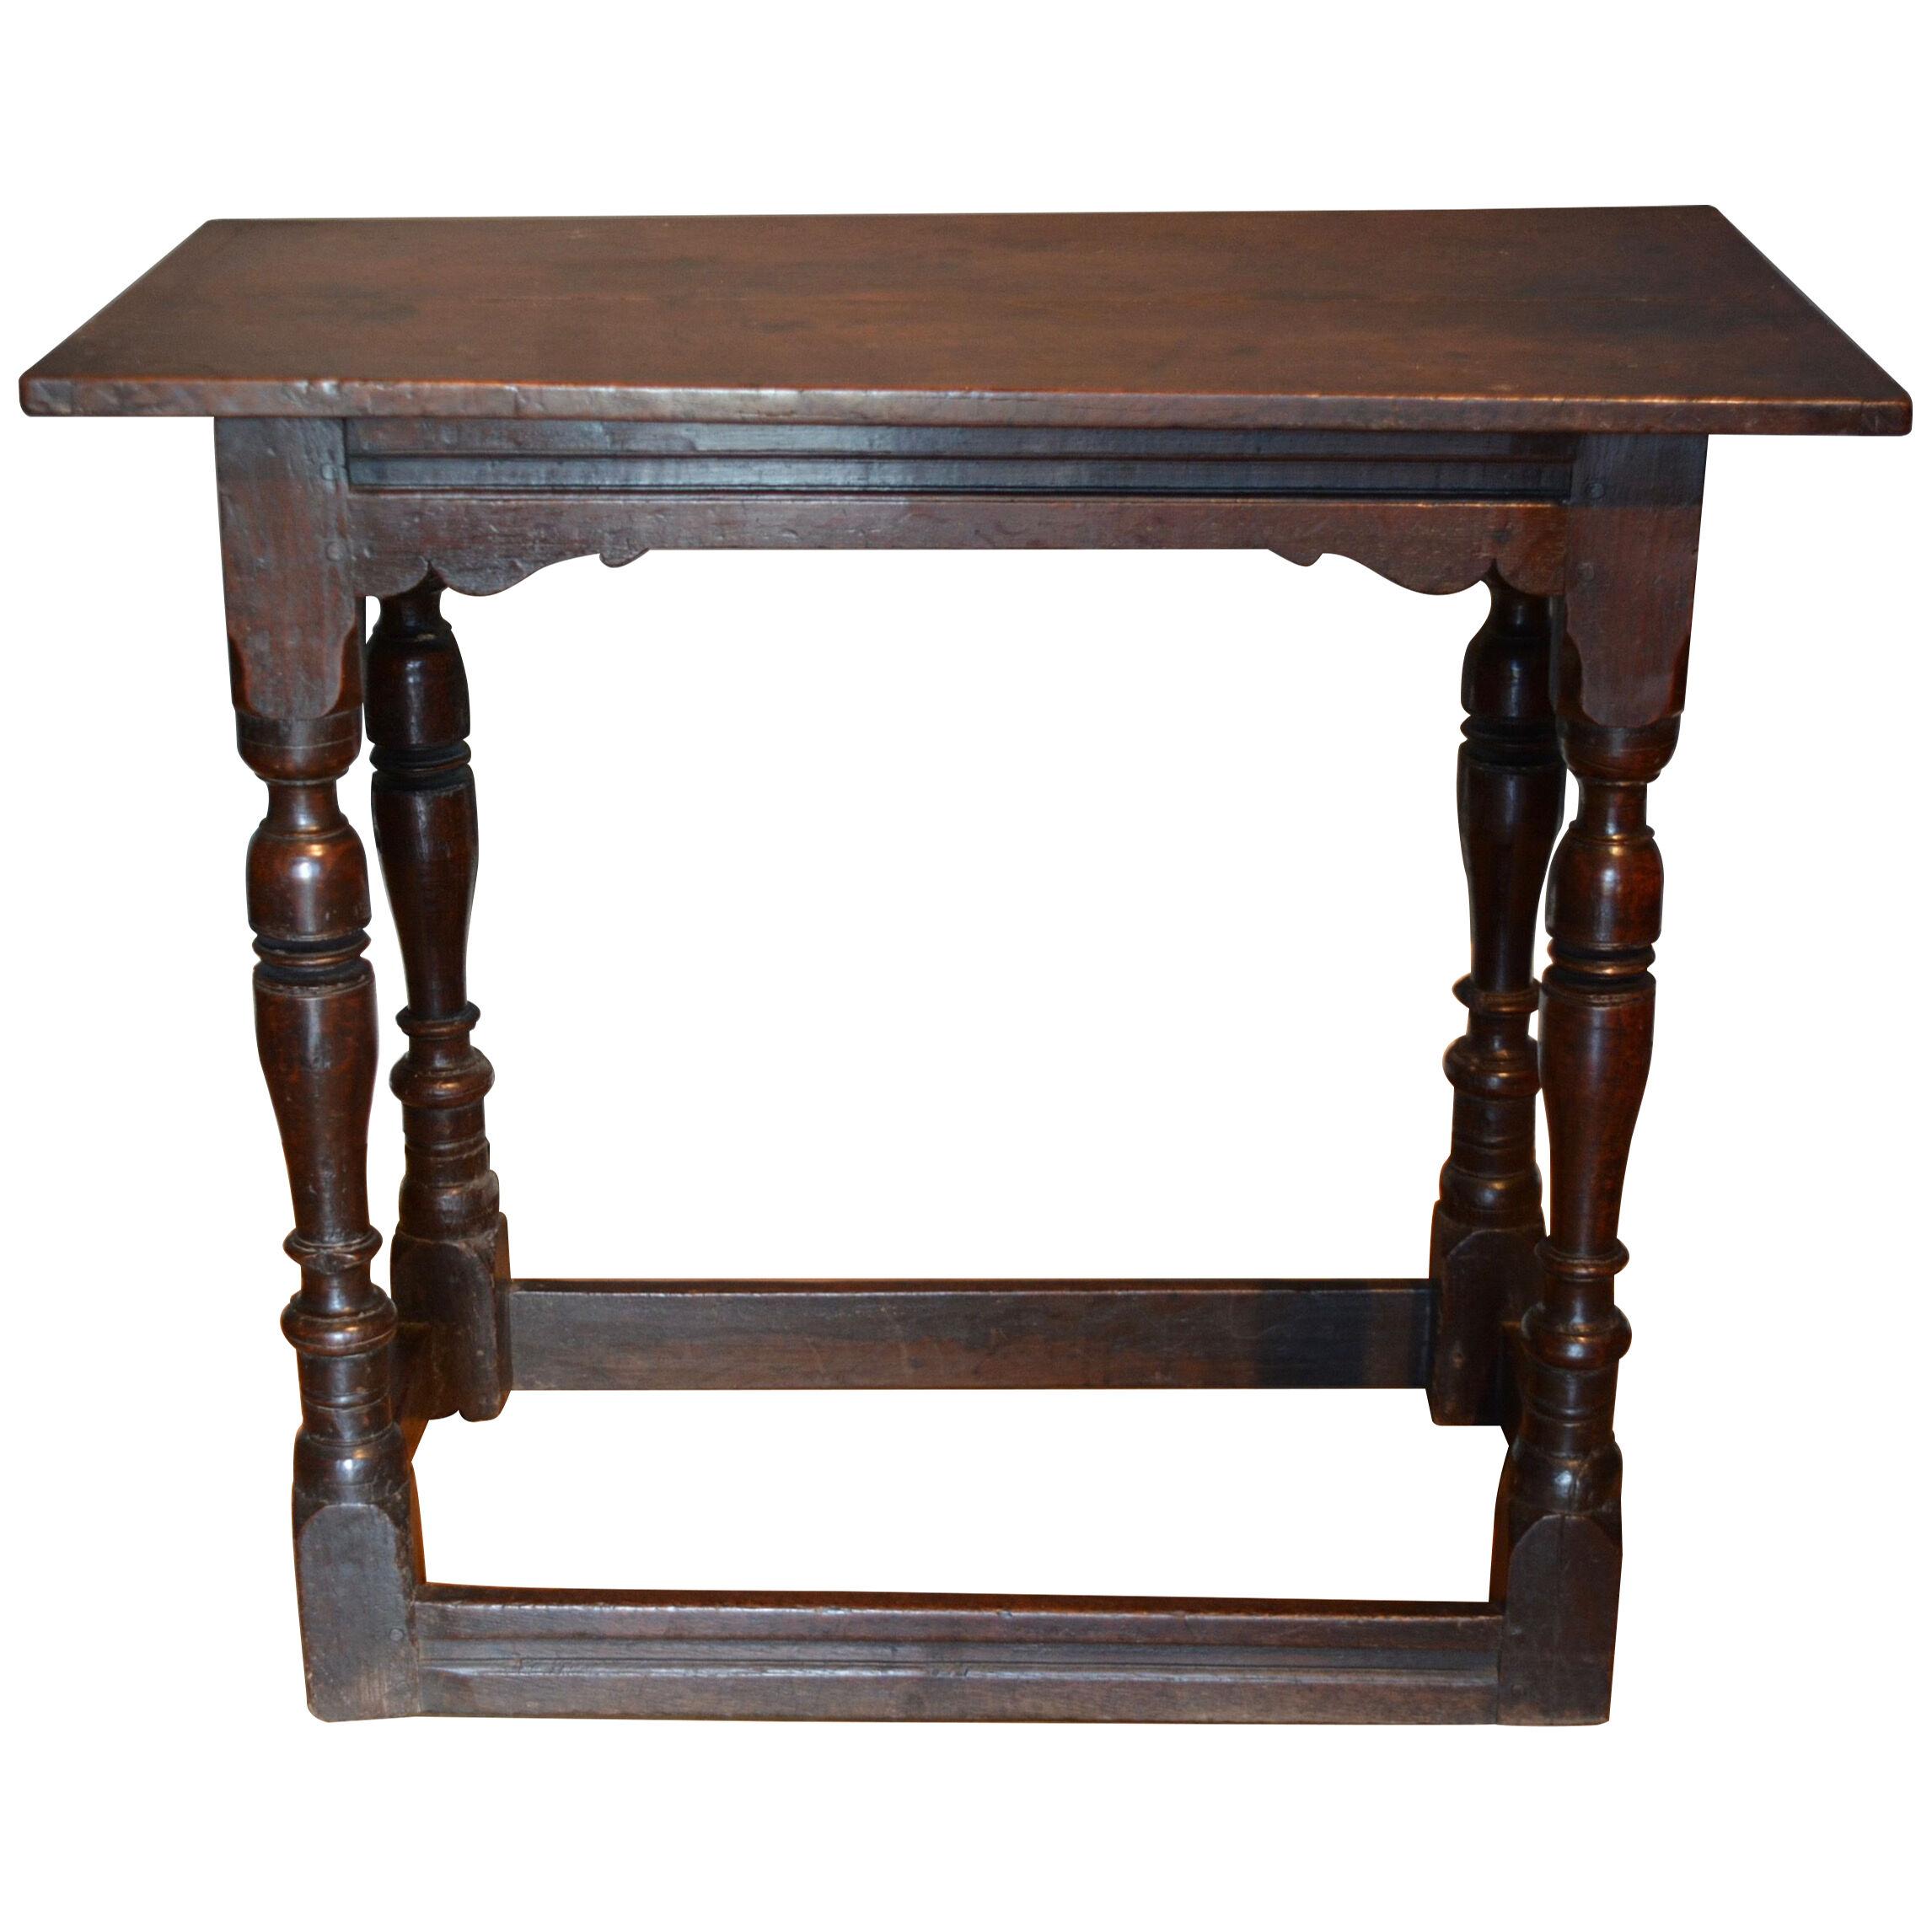 16th Century oak centre table